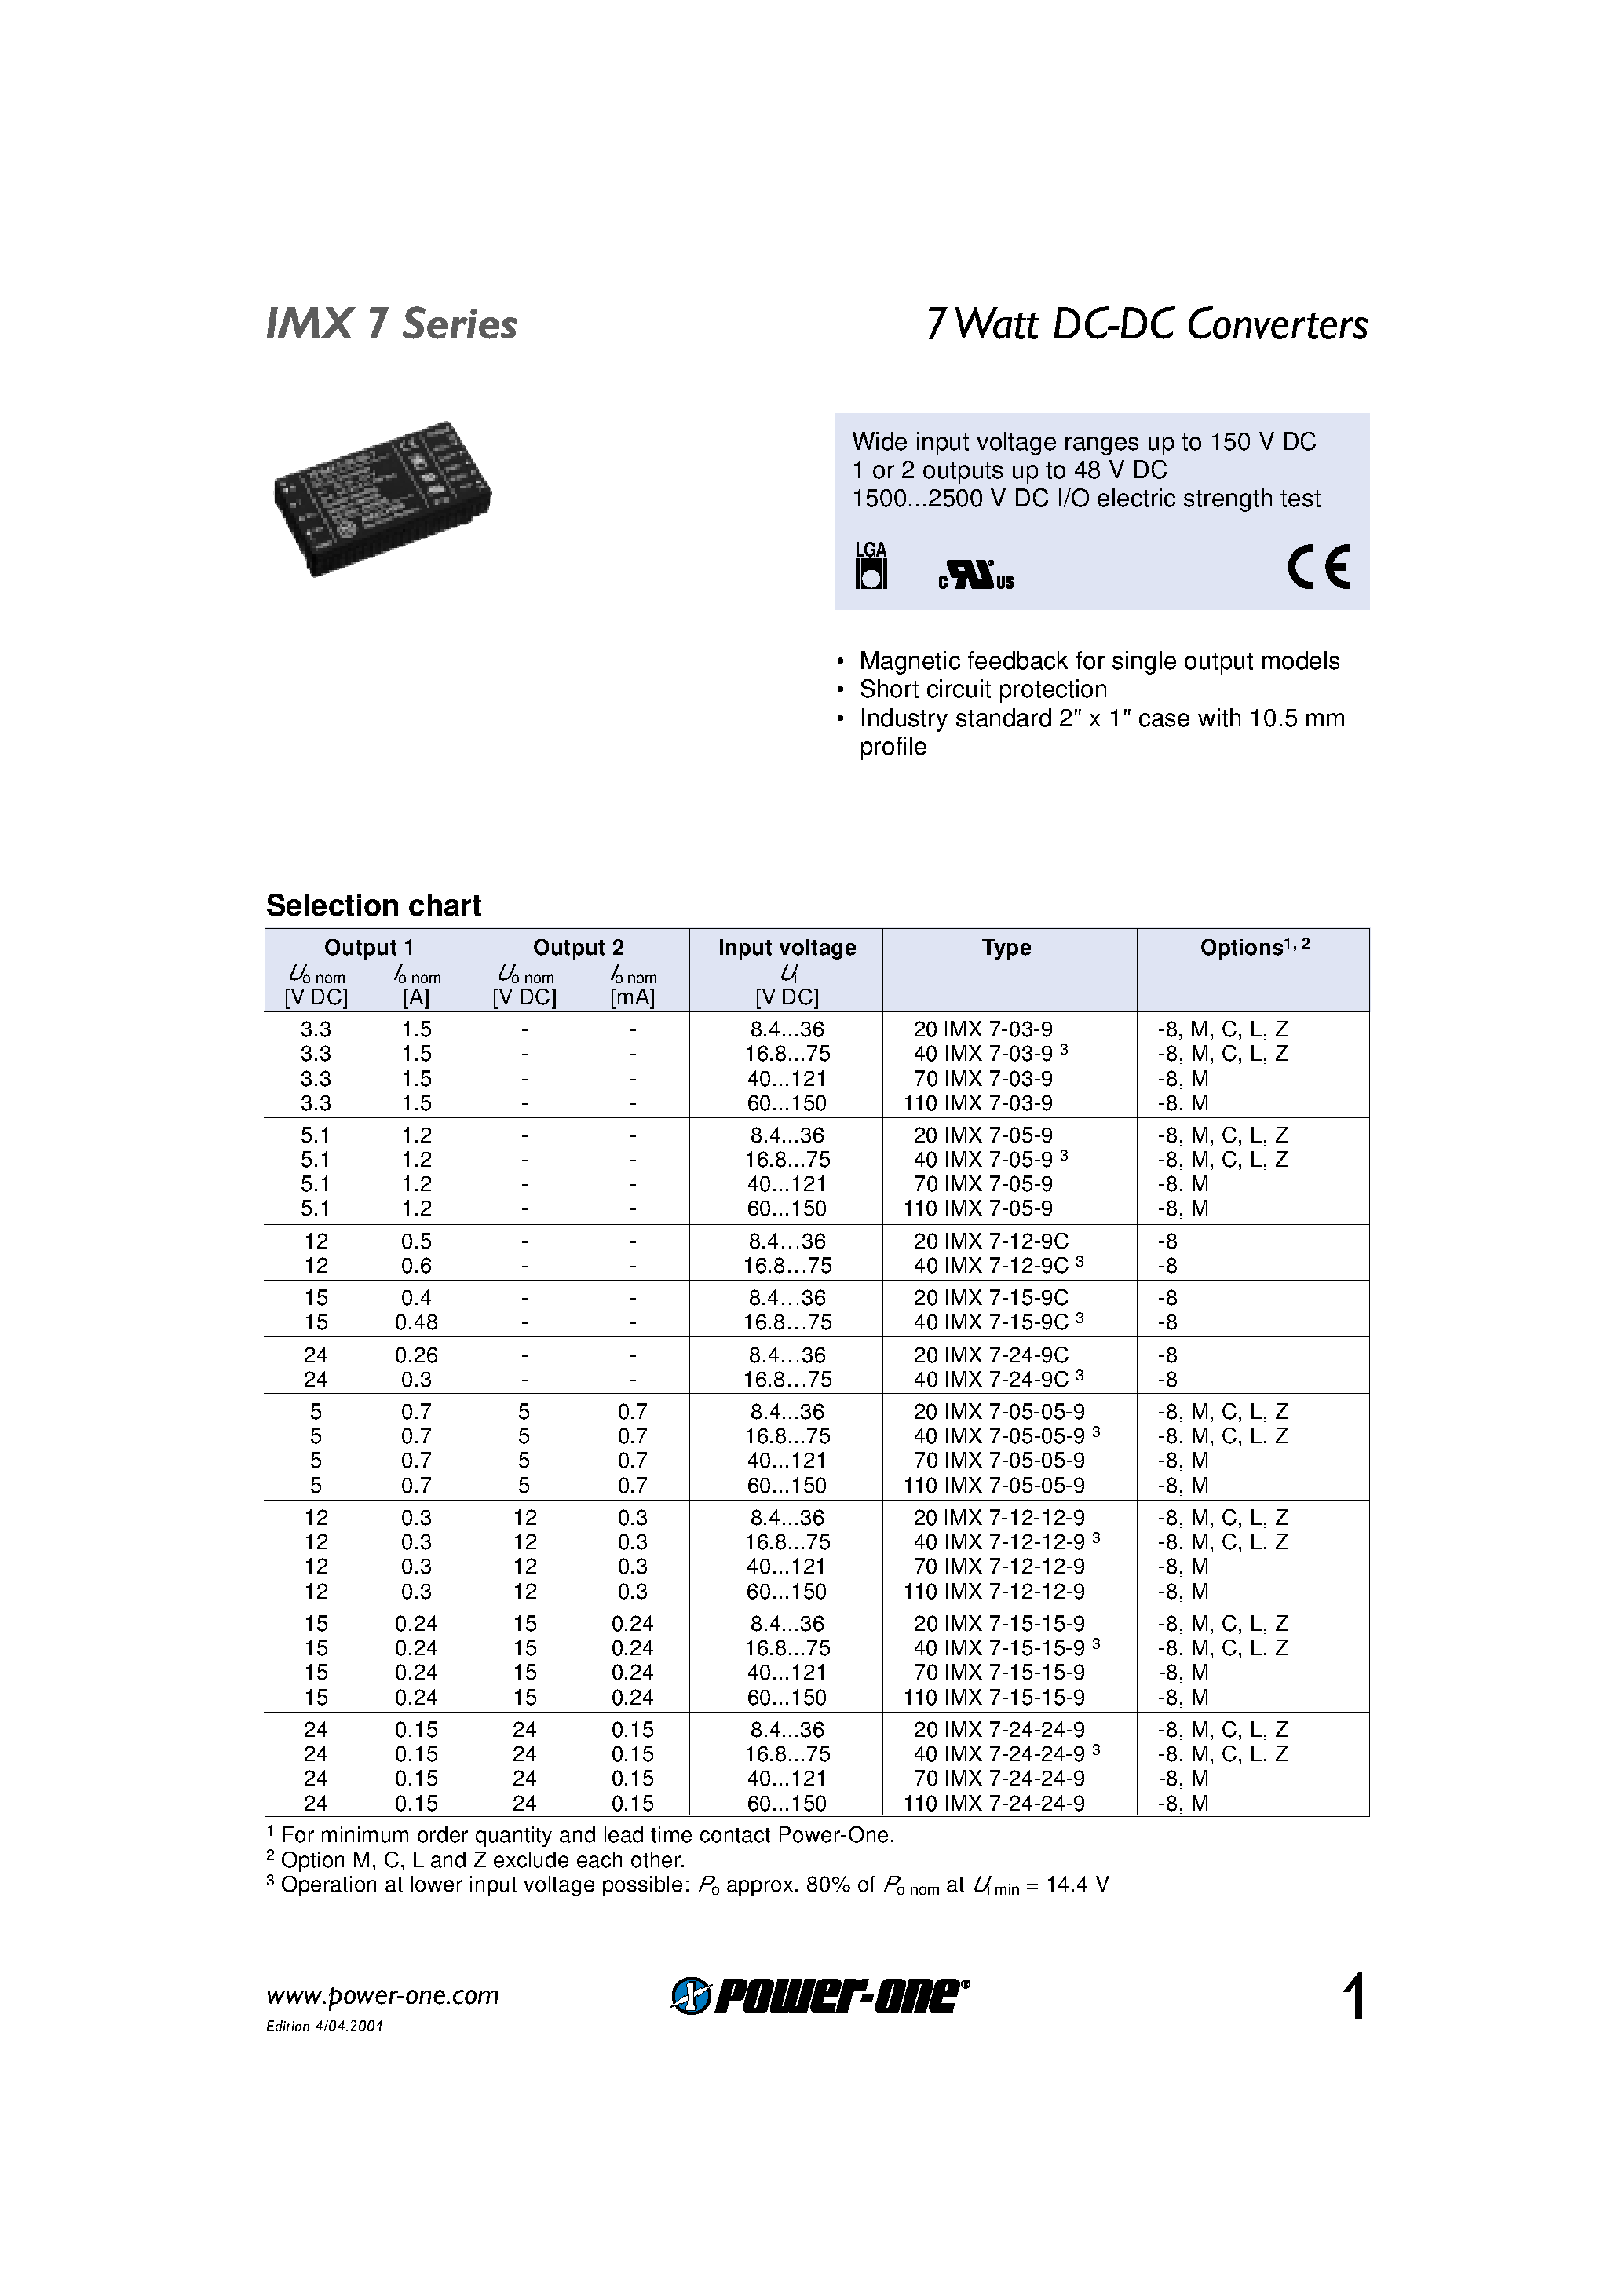 Datasheet 40IMX7-12-12-9 - 7 Watt DC-DC Converters page 1